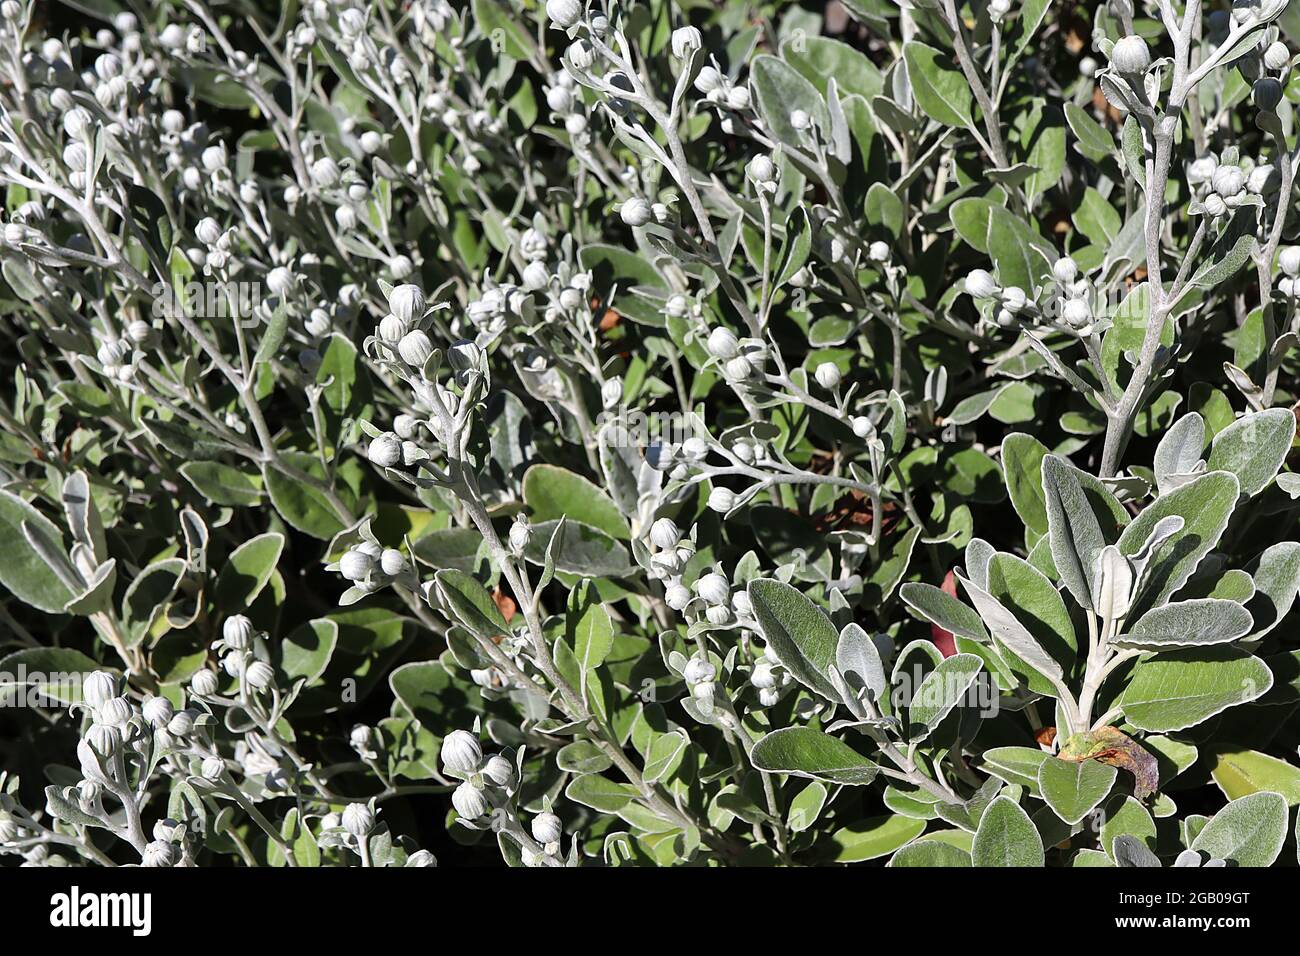 Brachyglottis / Senecio greyi ‘Sunshine’ Daisy bush – silver flower buds and silver green leaves, June, England, UK Stock Photo